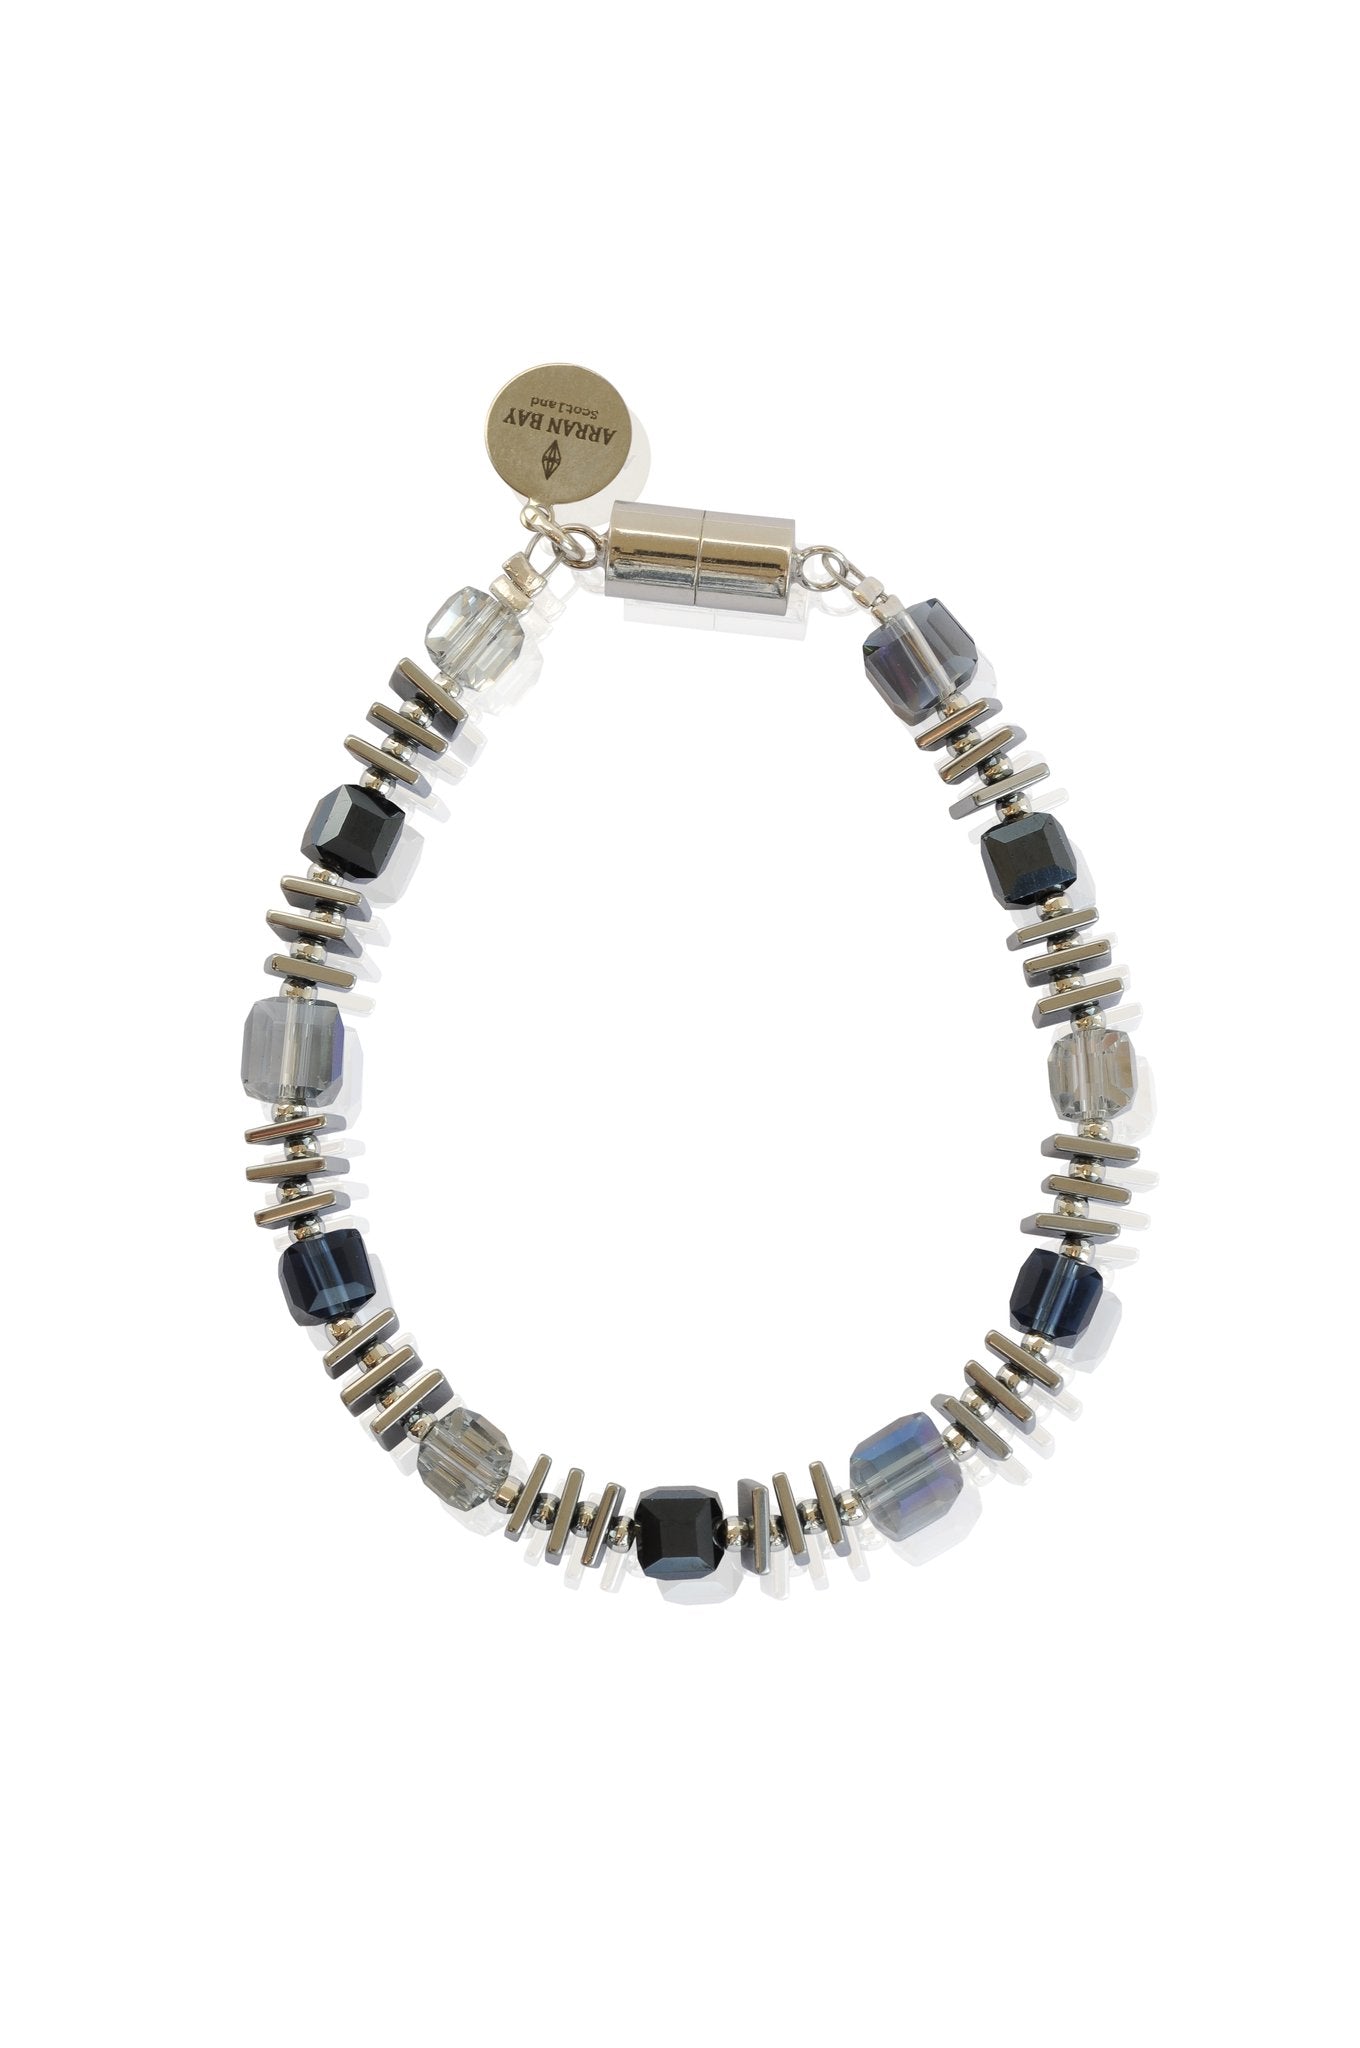 Hematite Cats Eye Bracelet - The Nancy Smillie Shop - Art, Jewellery & Designer Gifts Glasgow